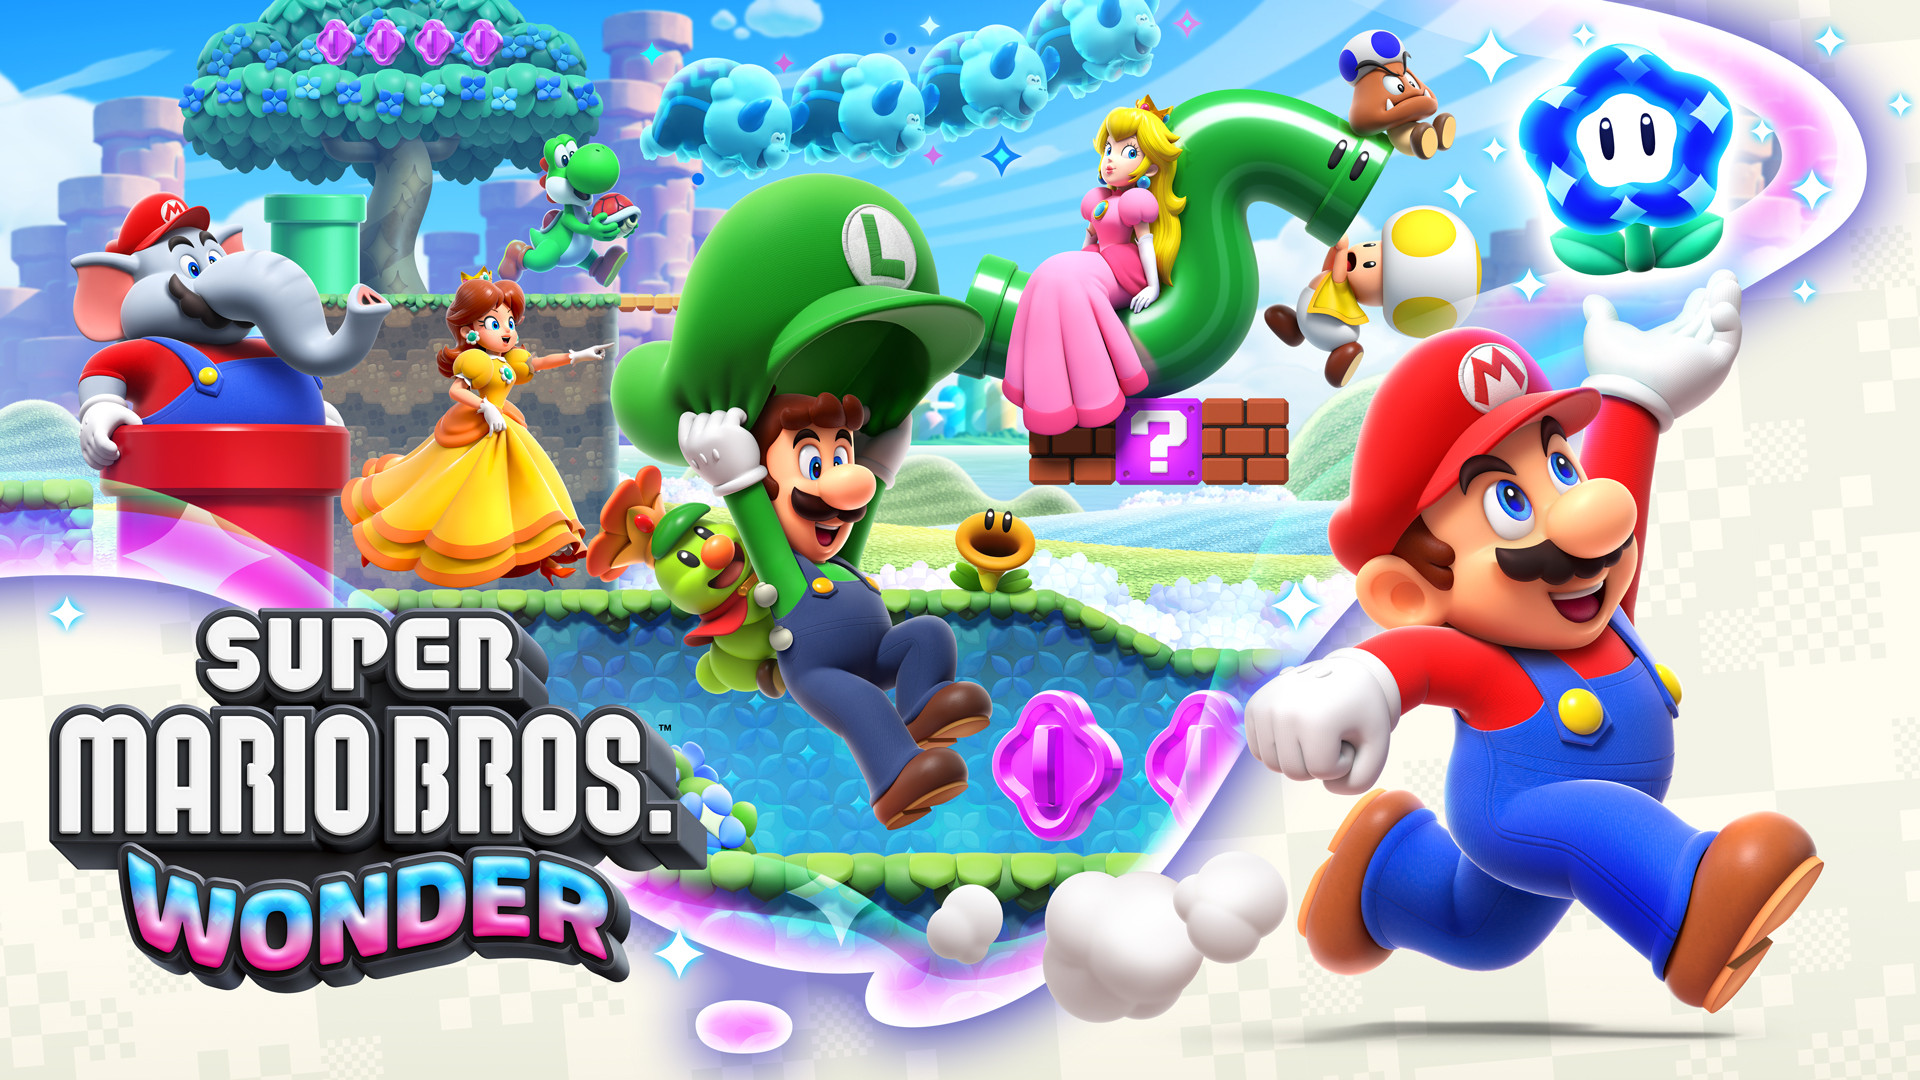 Is Super Mario Bros. Wonder Co-Op & Multiplayer?